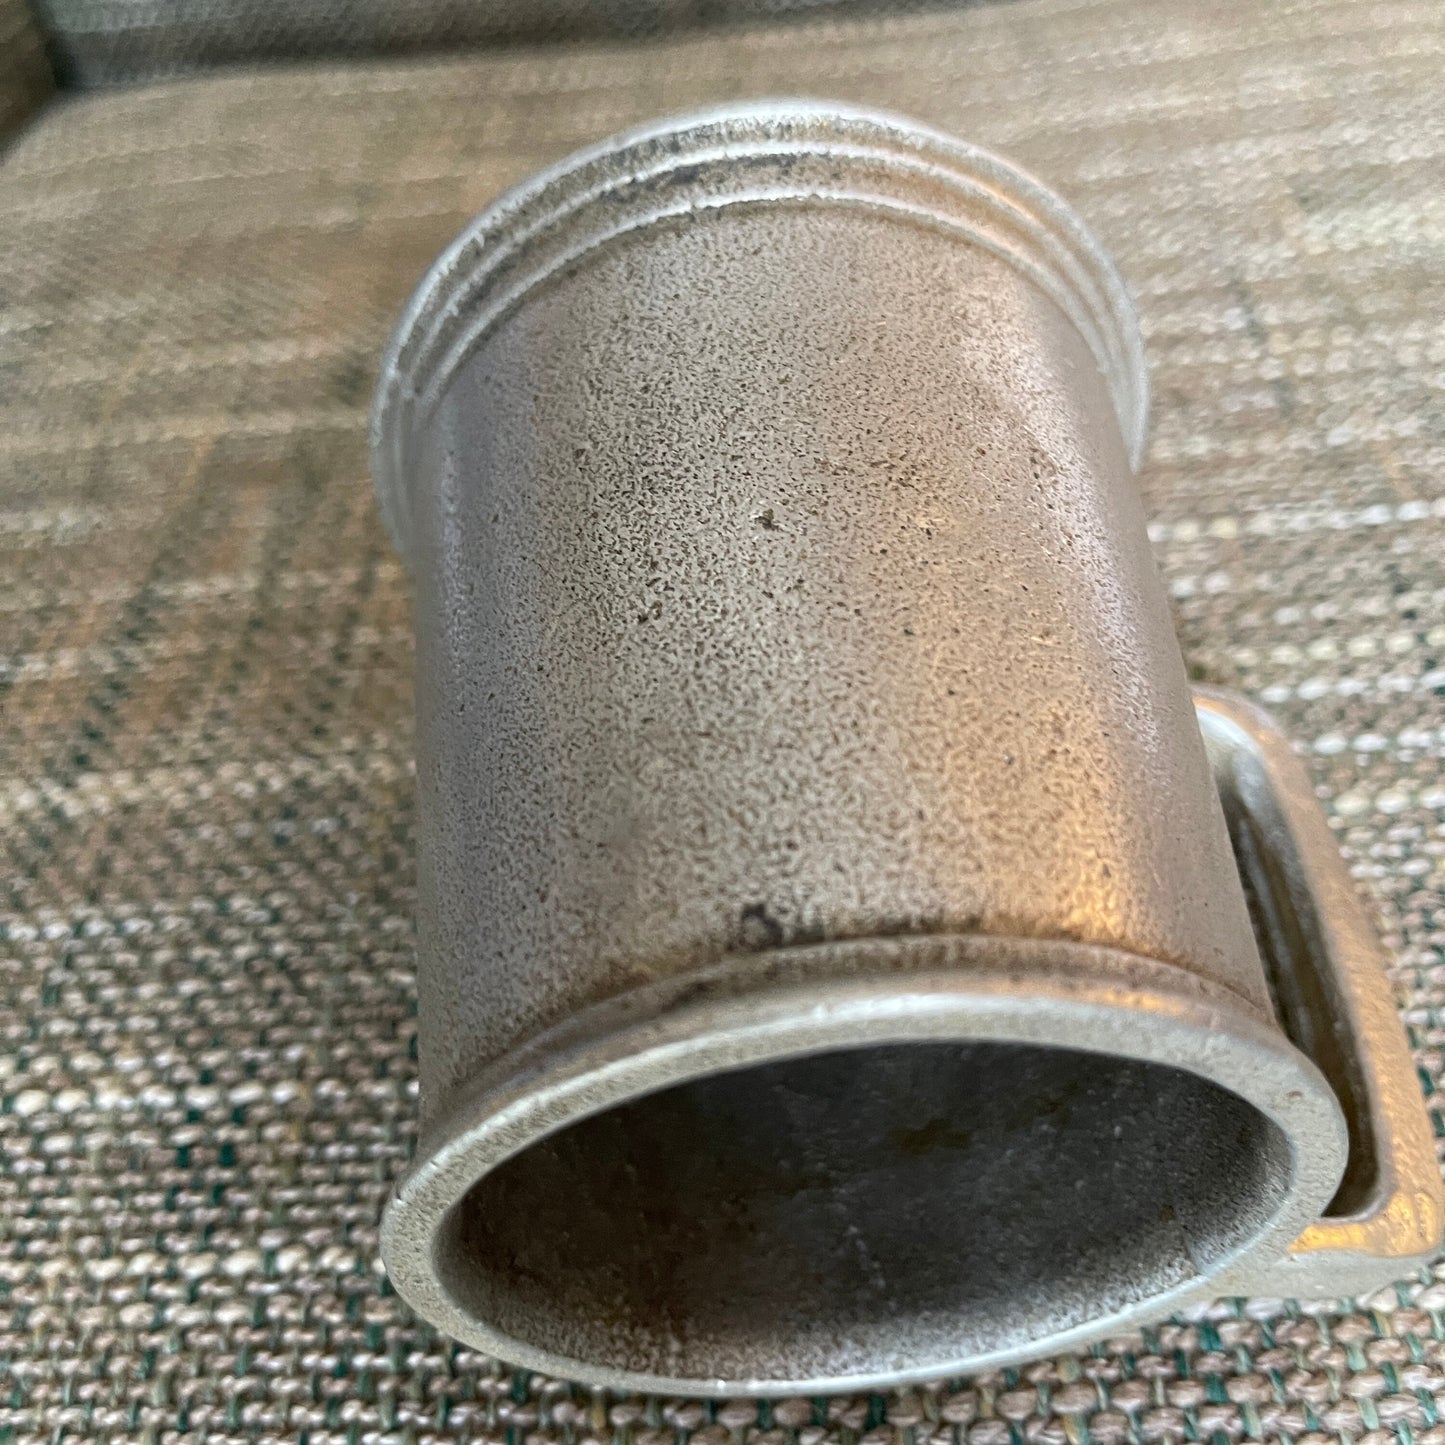 Pewter Tavern Mug 3.5 Inch Vintage Barware Collectible Serving Ware*